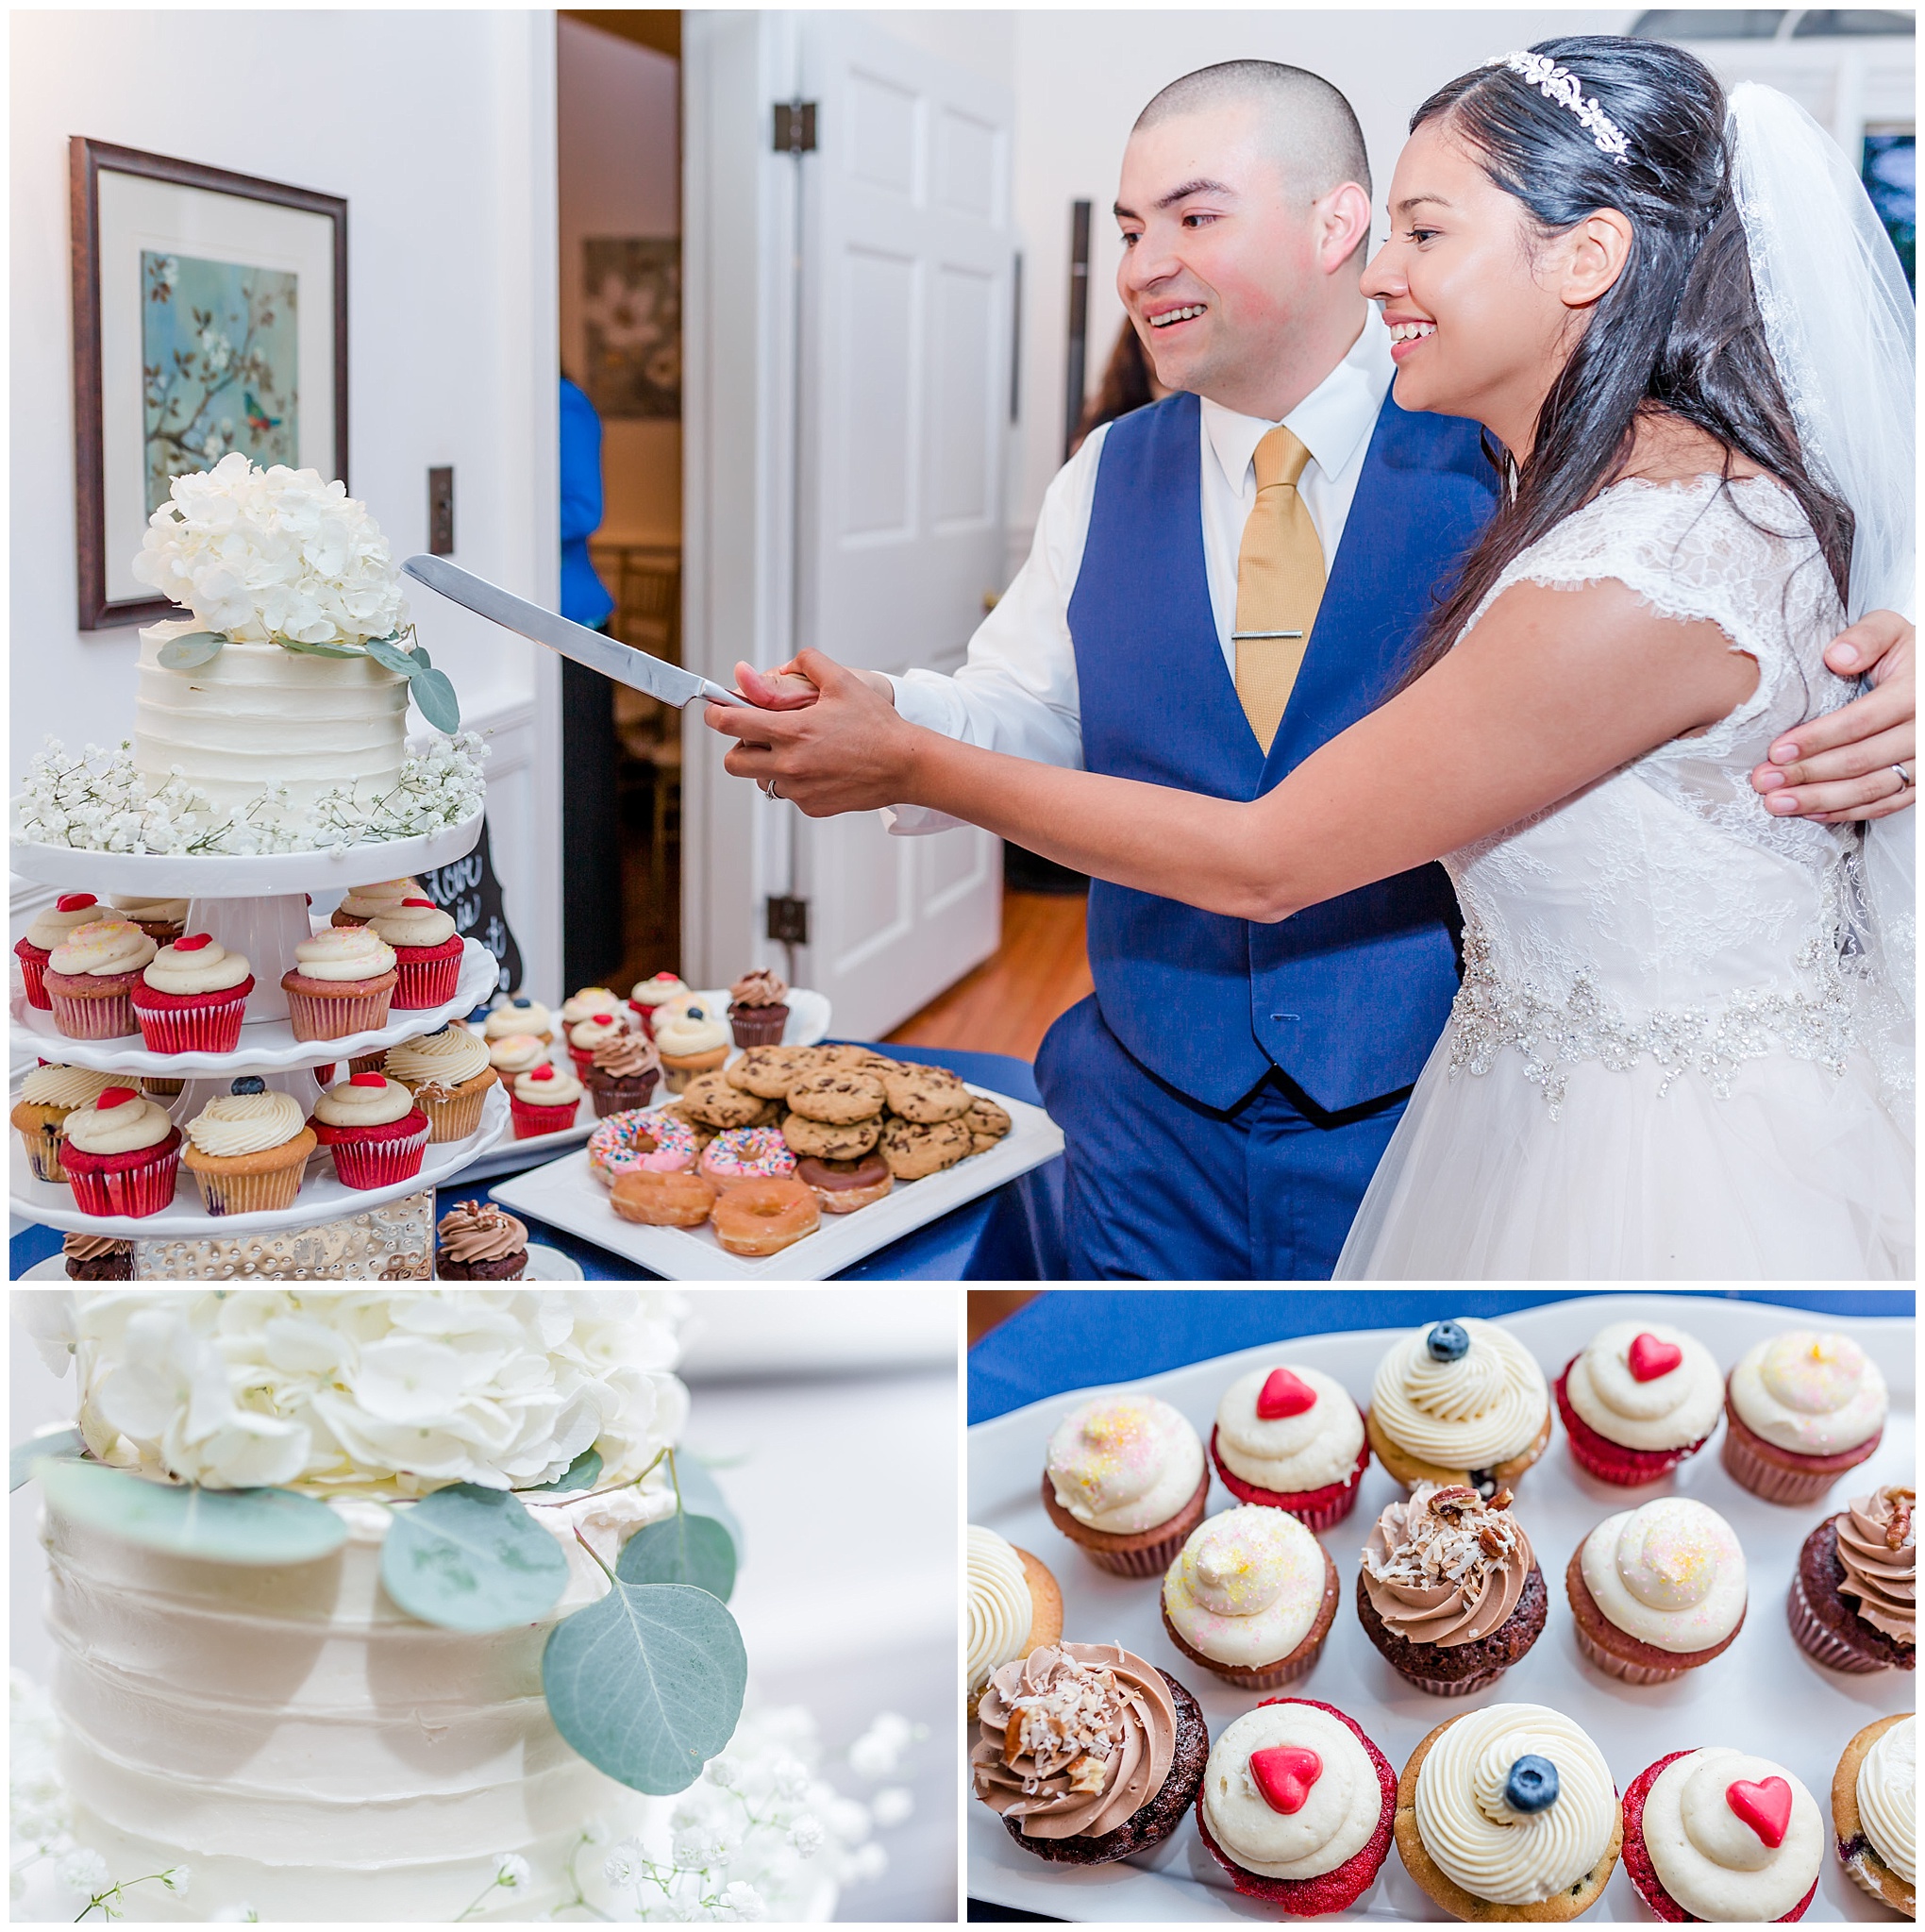 elegant Rust Manor House wedding, dessert table, cupcakes, Cupcakes Actually, wedding cake, alternative wedding desserts, cake cutting